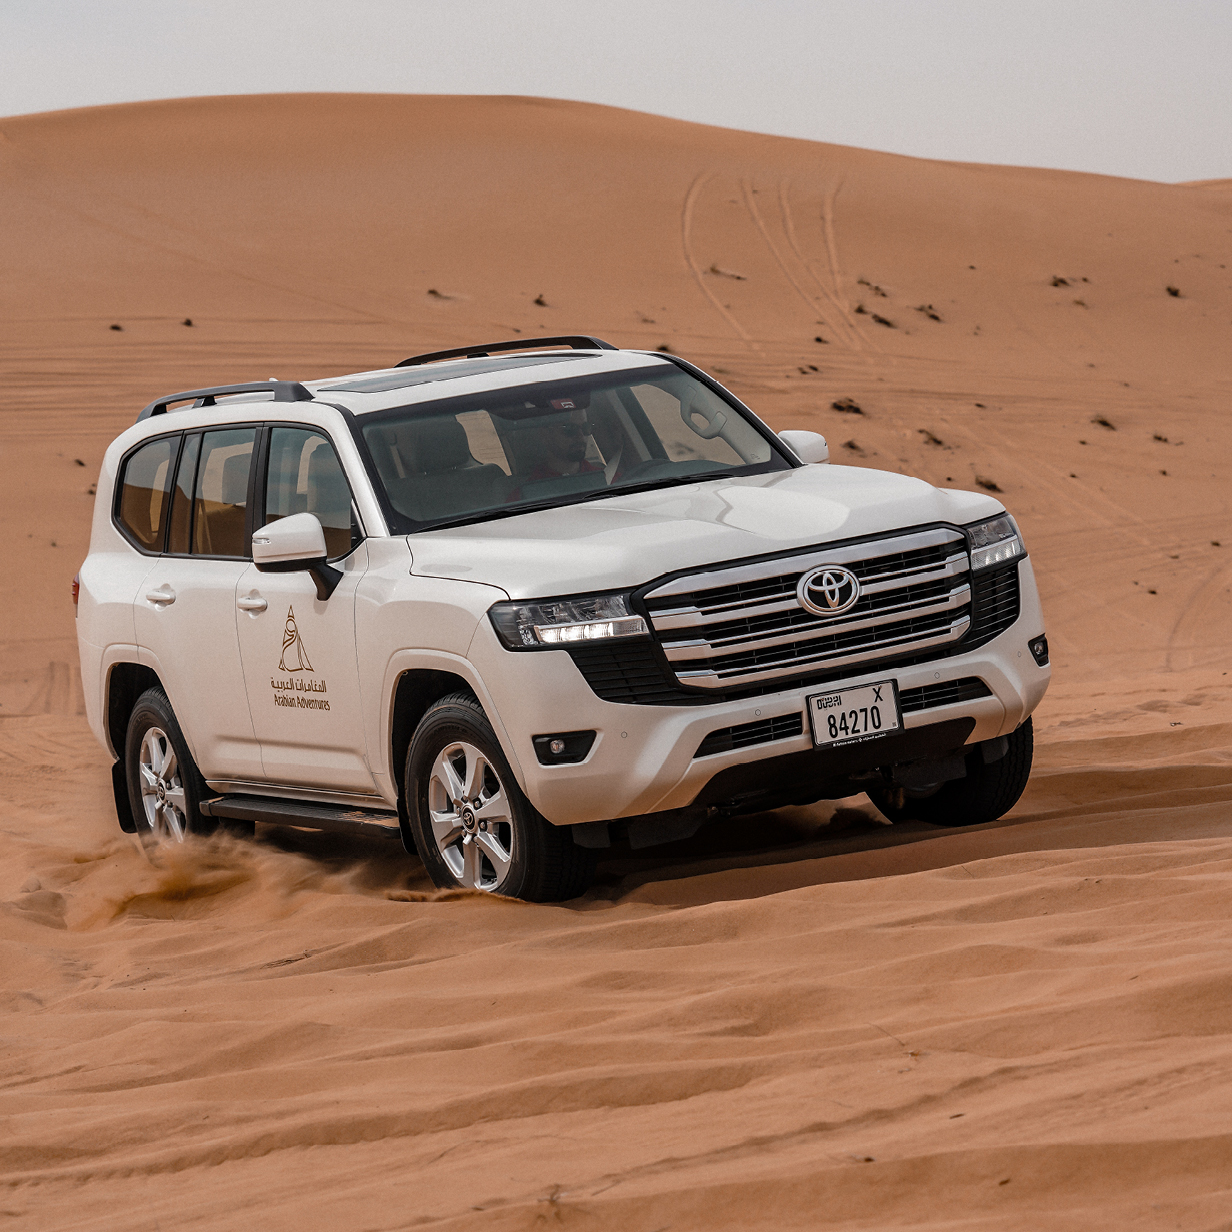 arabian adventures desert safari dubai